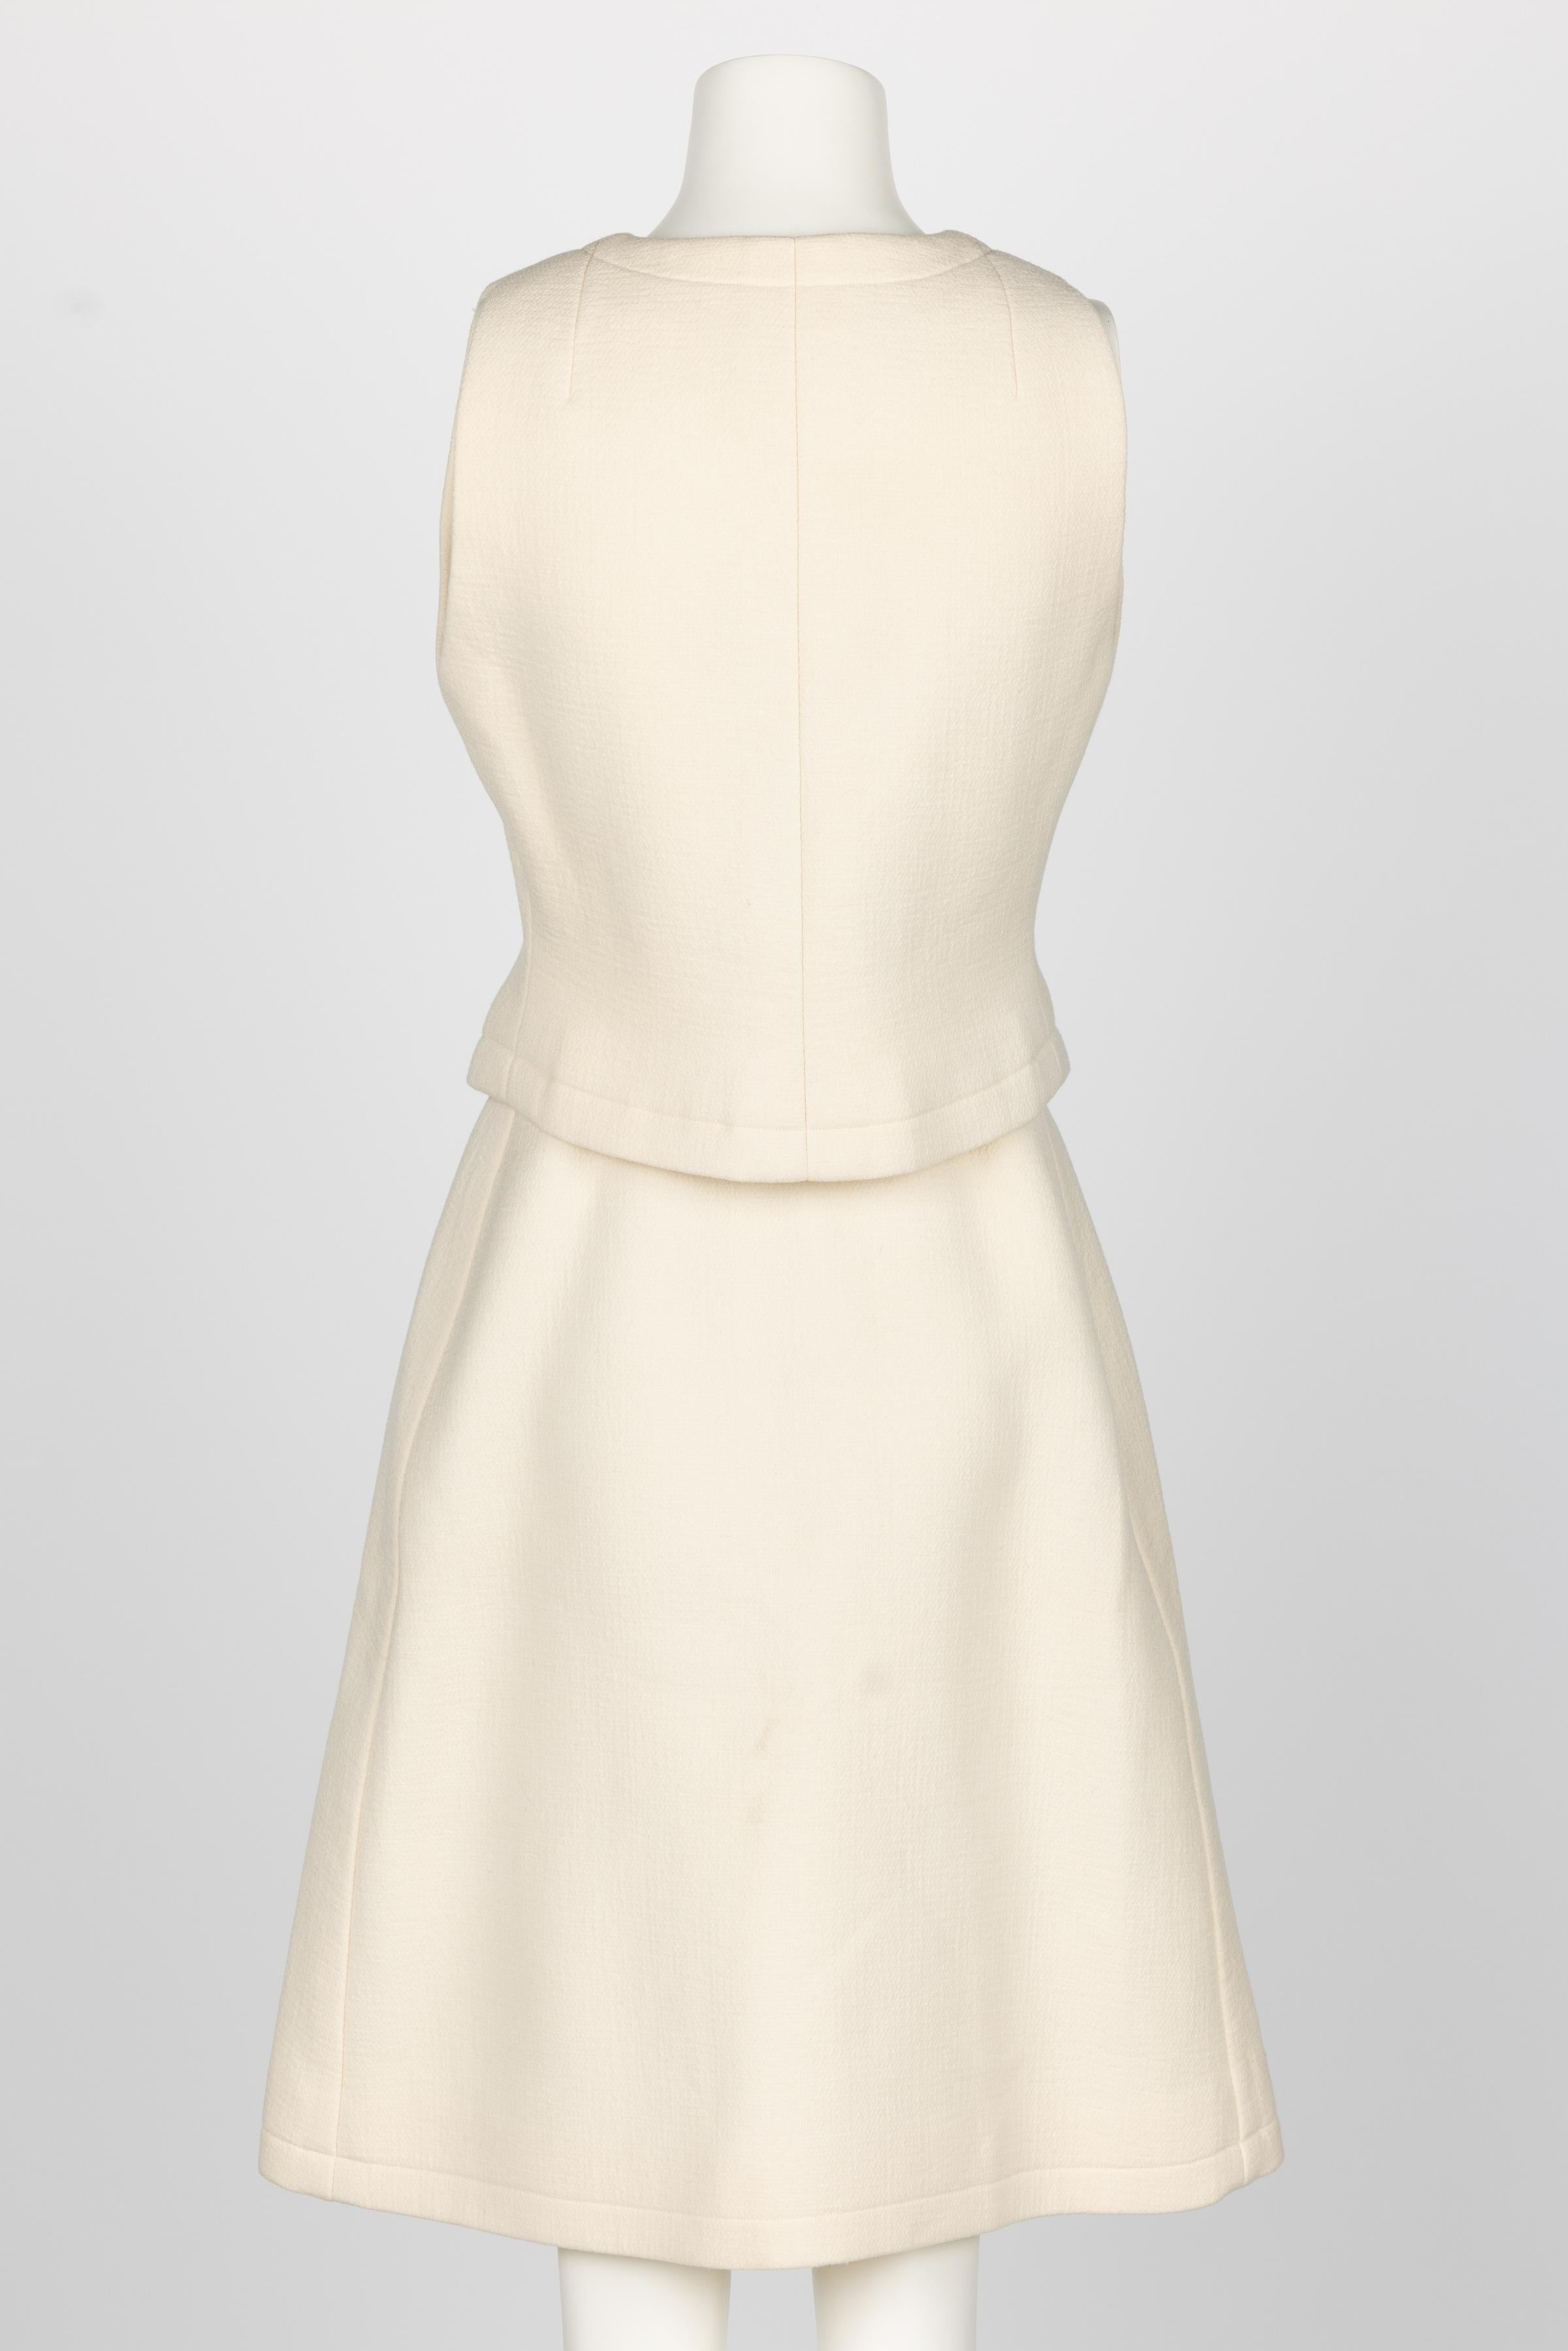 1960s Pauline Trigere Ivory & Black Tailored Vest Skirt Suit For Sale 3